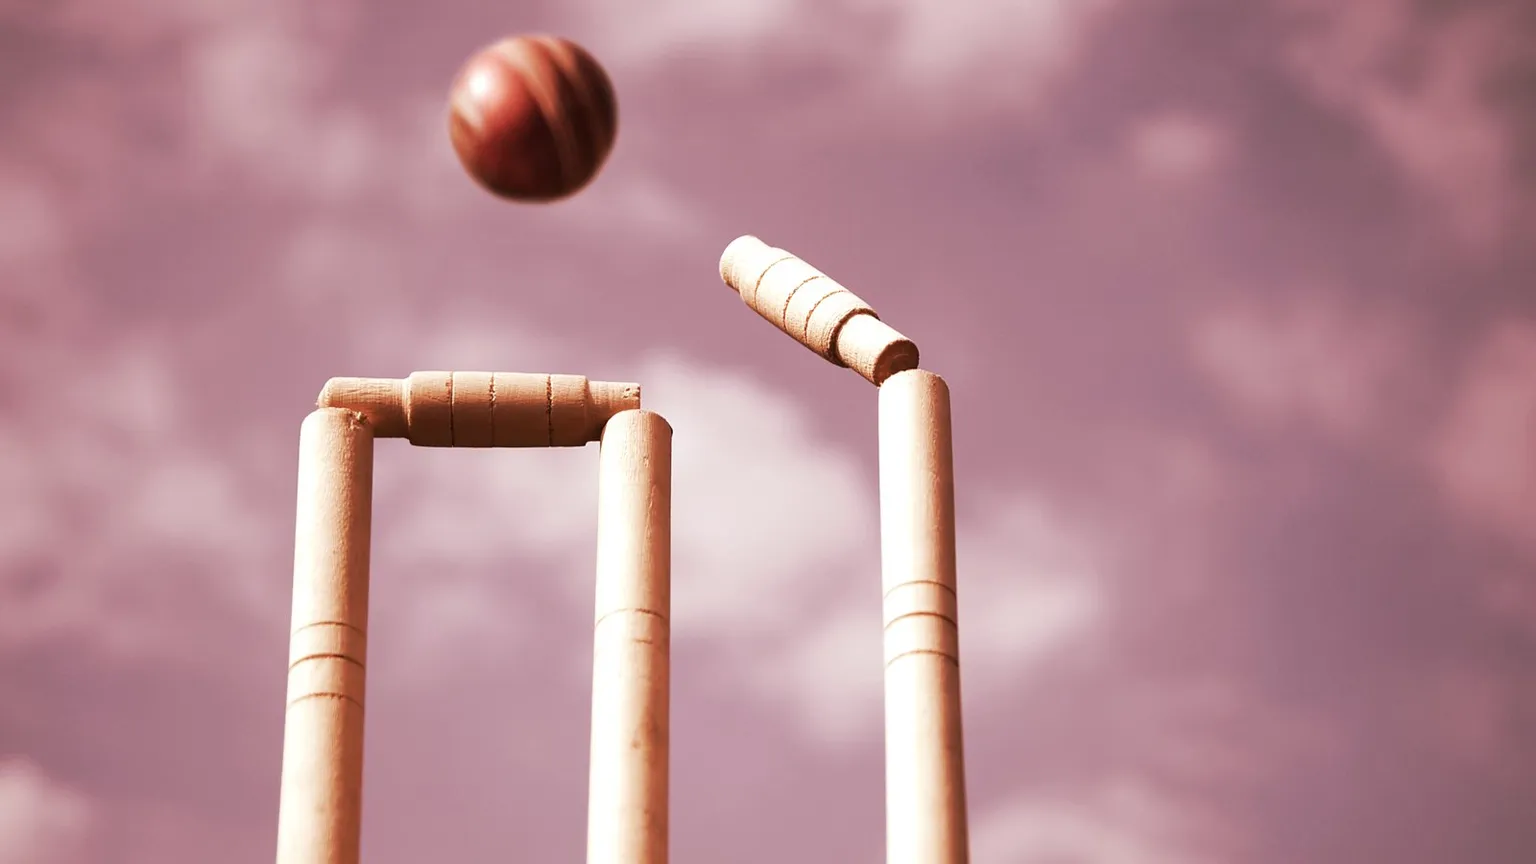 Cricket. Image: Shutterstock